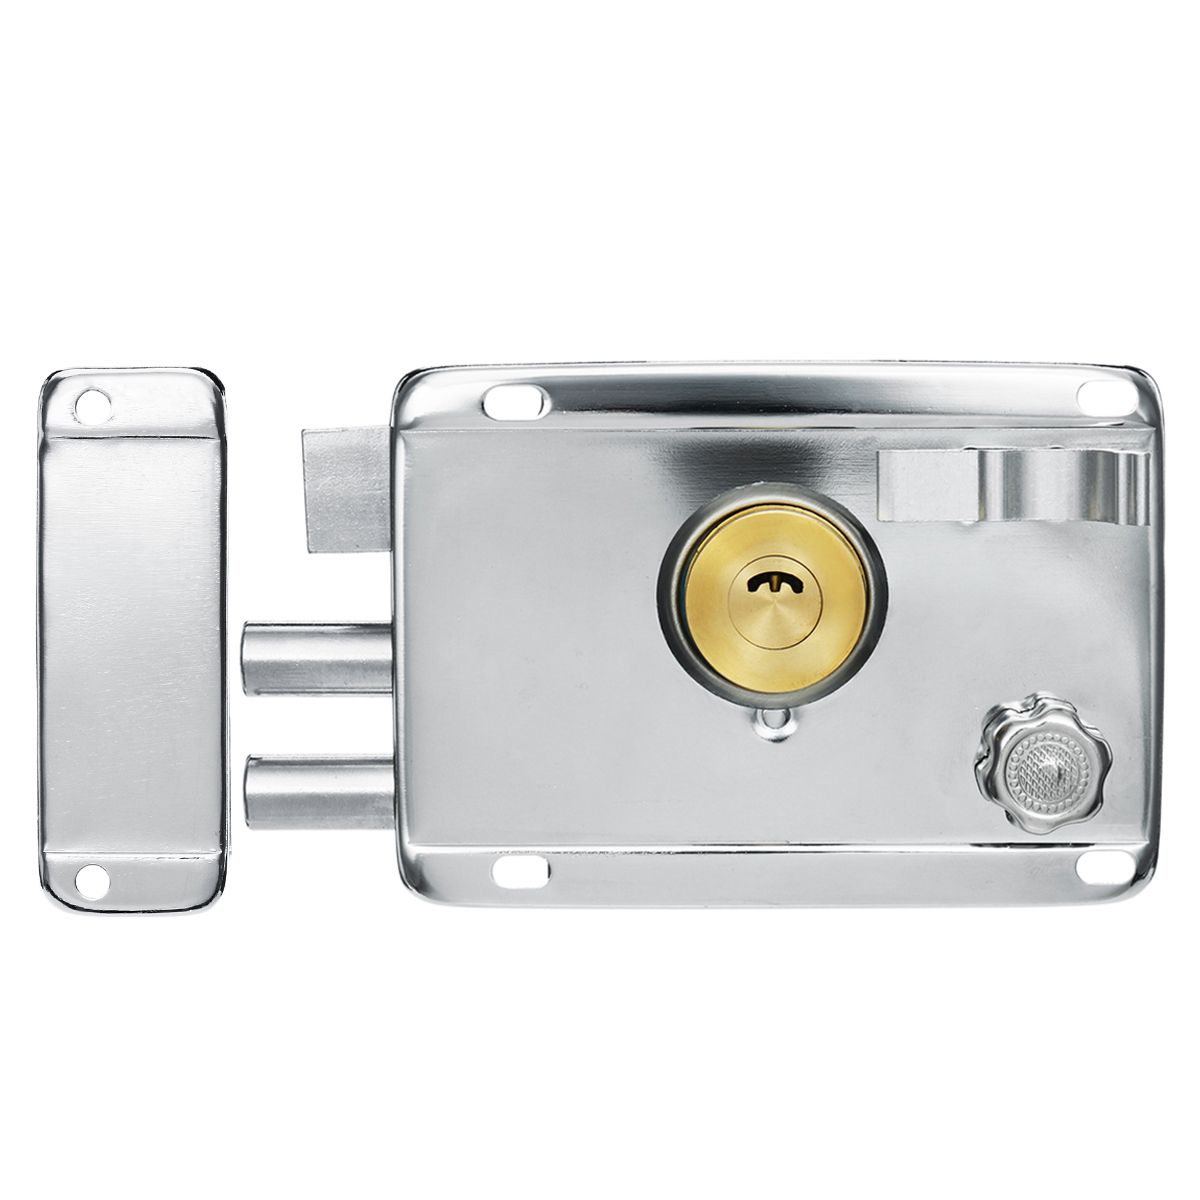 Exterior-Iron-Door-Locks-Security-Anti-theft-Lock-Multiple-Insurance-Lock-Wood-Gate-Lock-For-Furnitu-1407917